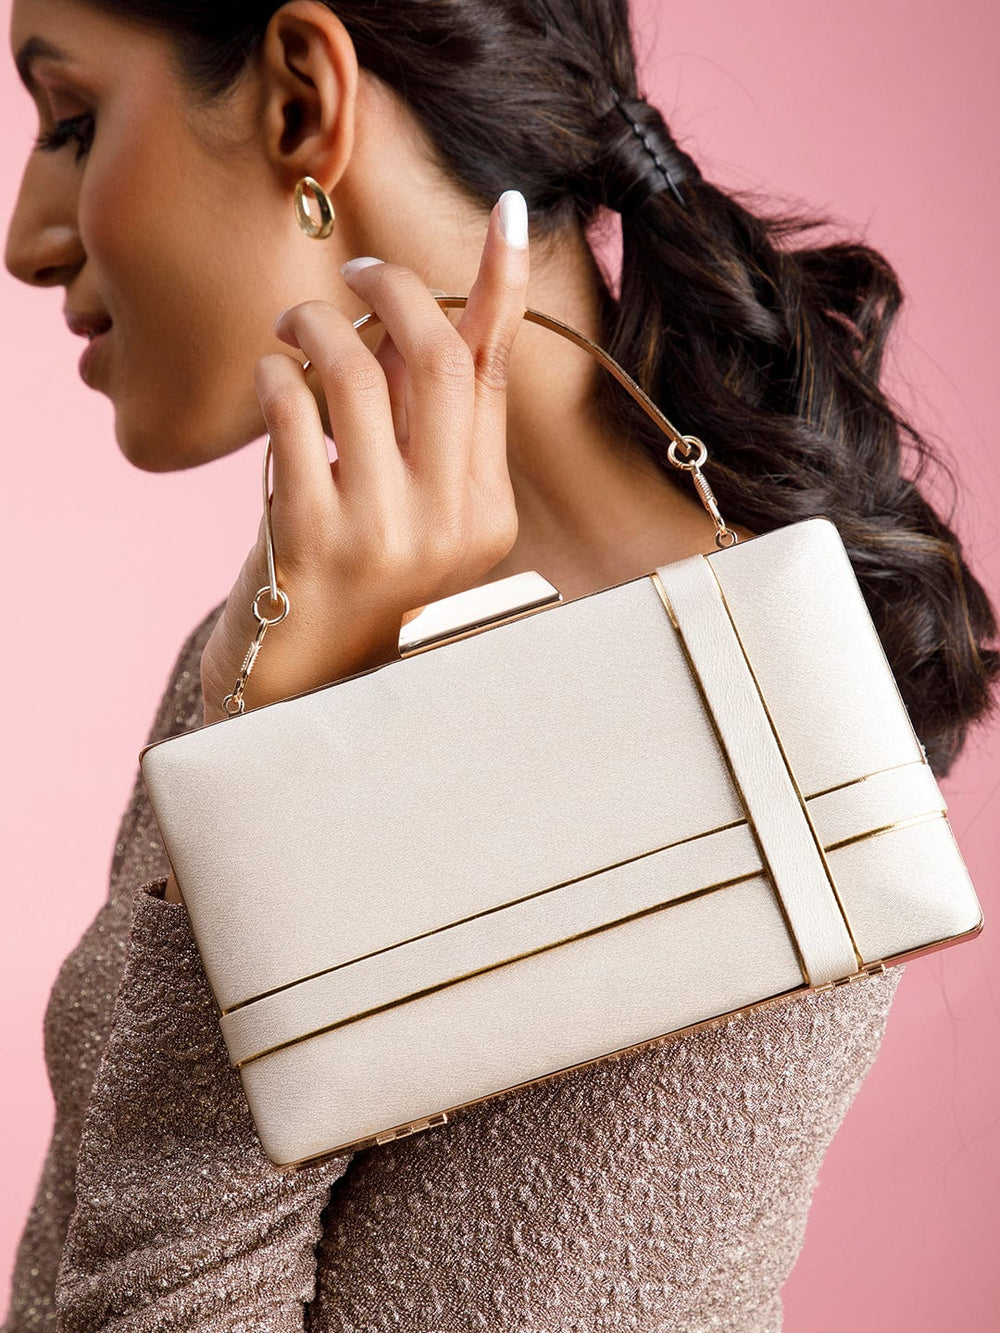 Rubans Light Grey Coloured Box Clutch With Golden Design. Handbag & Wallet Accessories